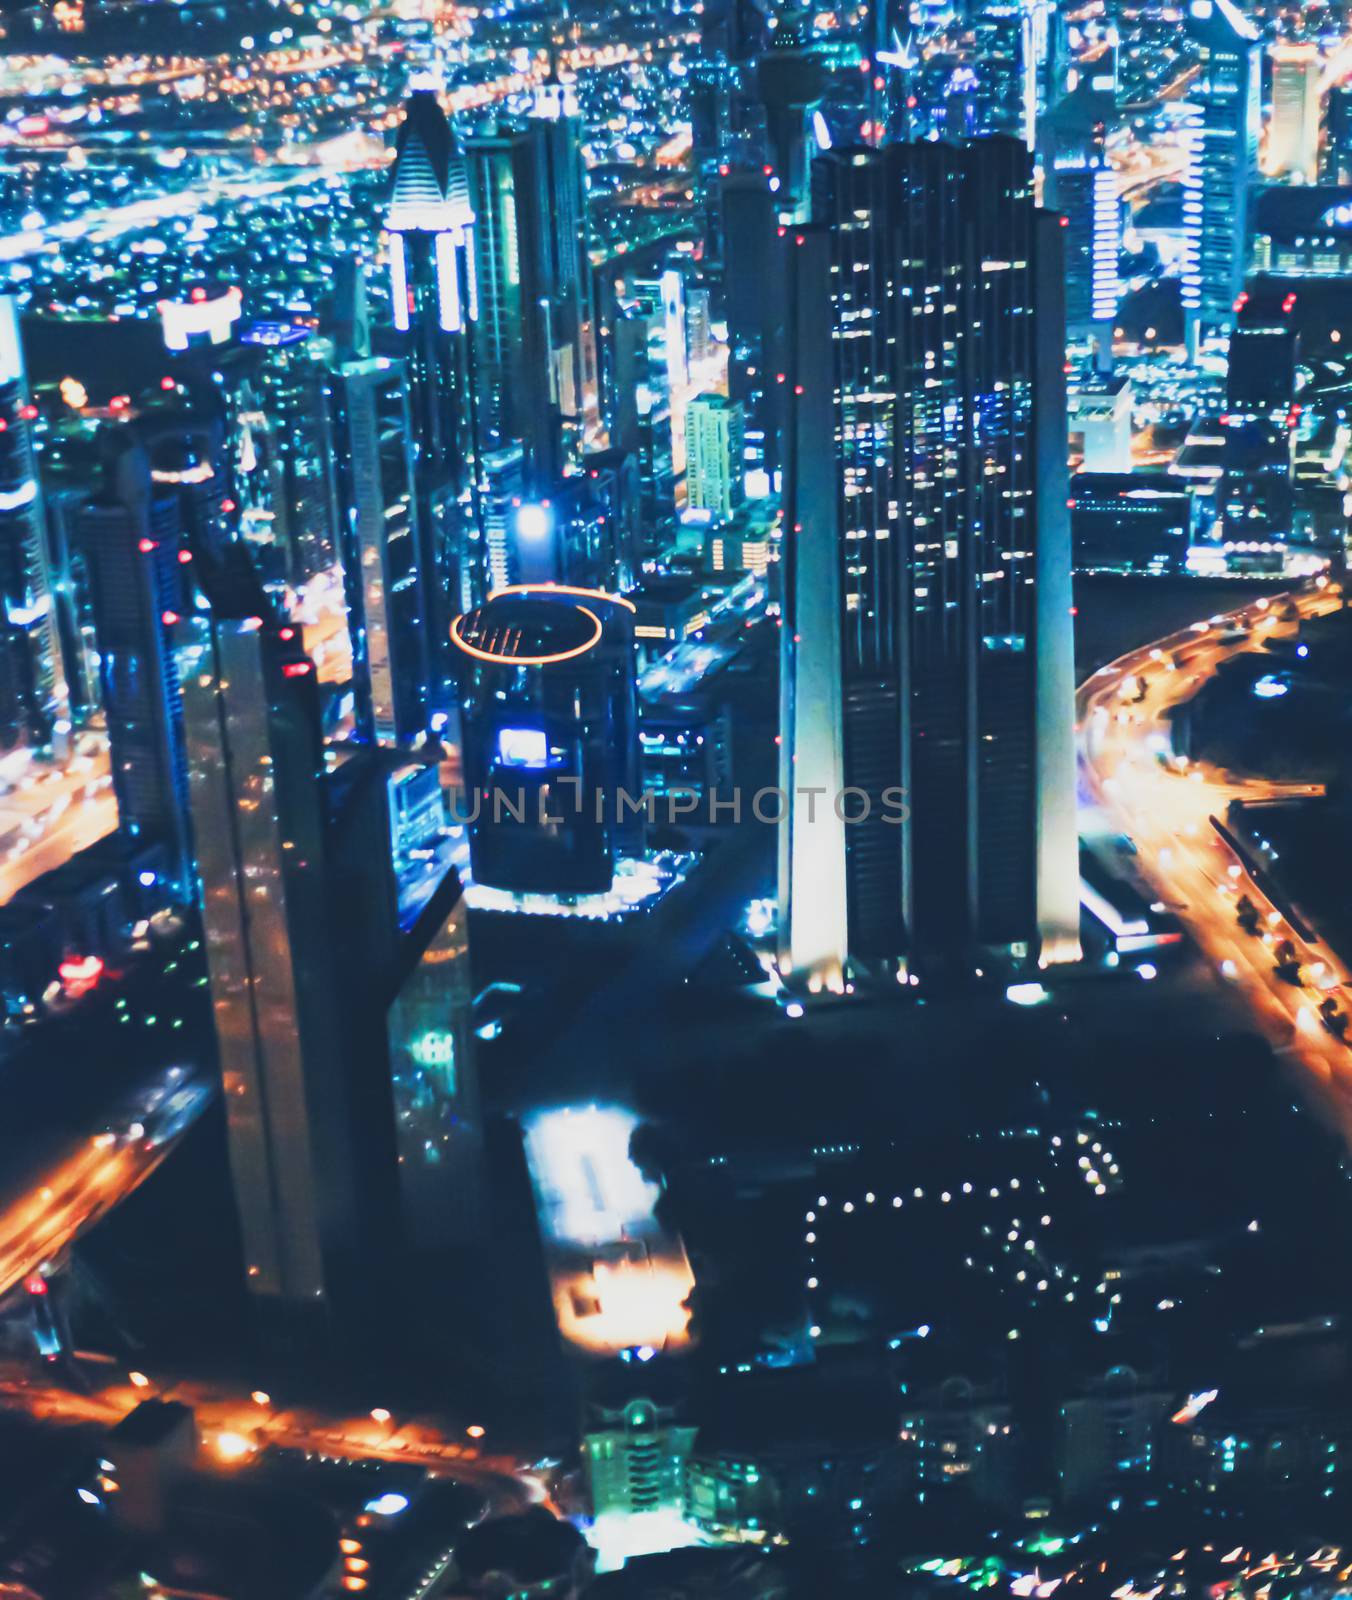 Aerial night view of Dubai in United Arab Emirates, metropolitan cityscape scenery